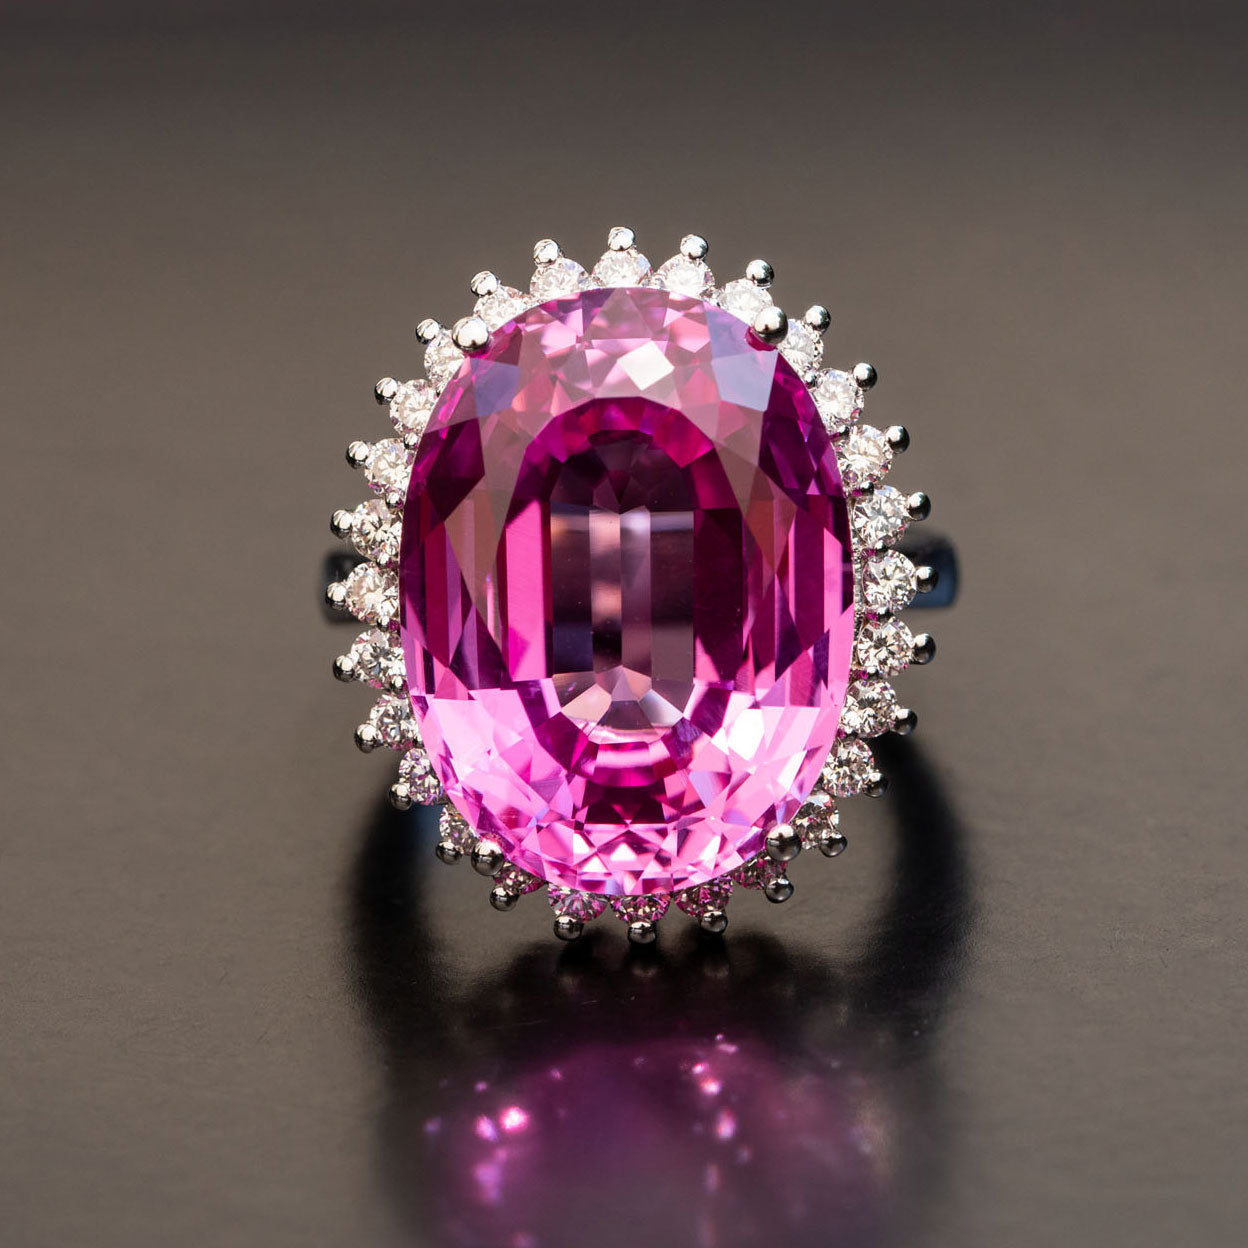 Large Oval Cut Pink Sapphire Stone Diamond Pendant